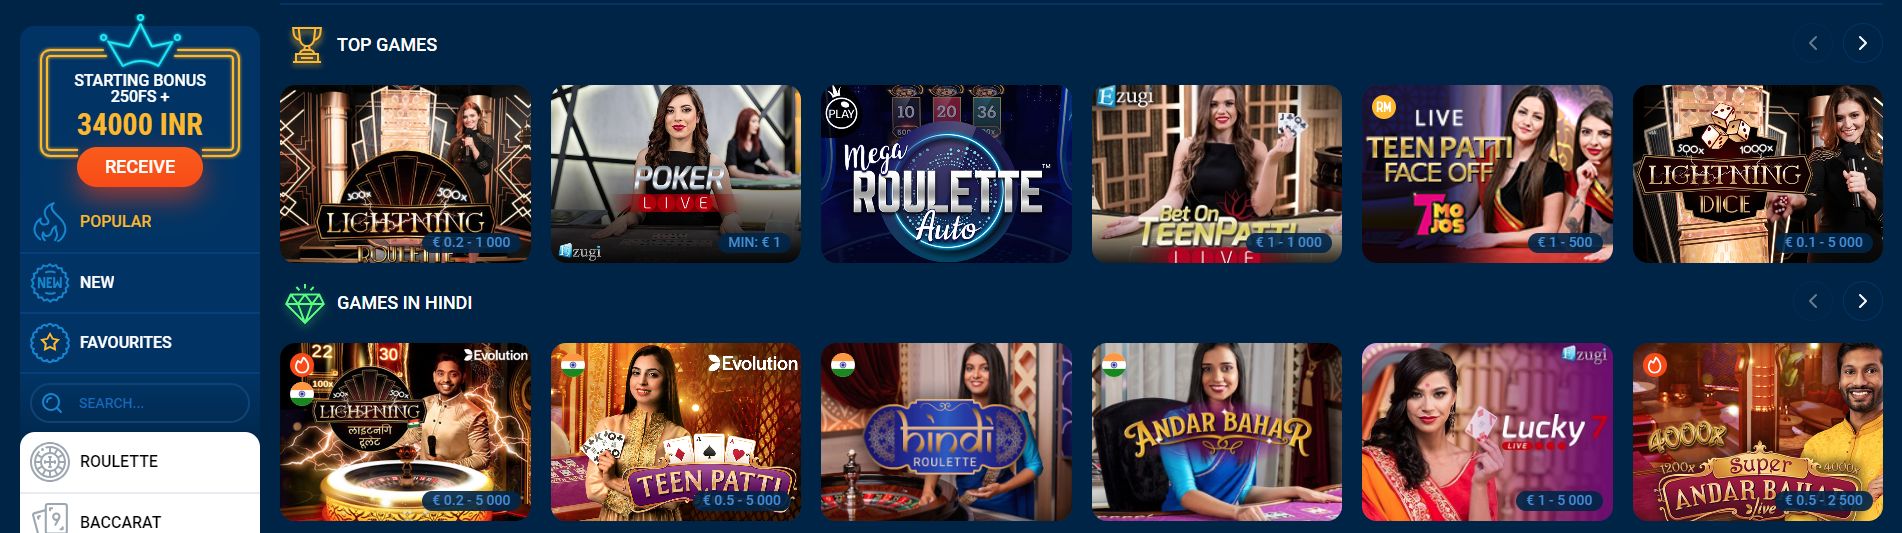 mostbet login india.com casino